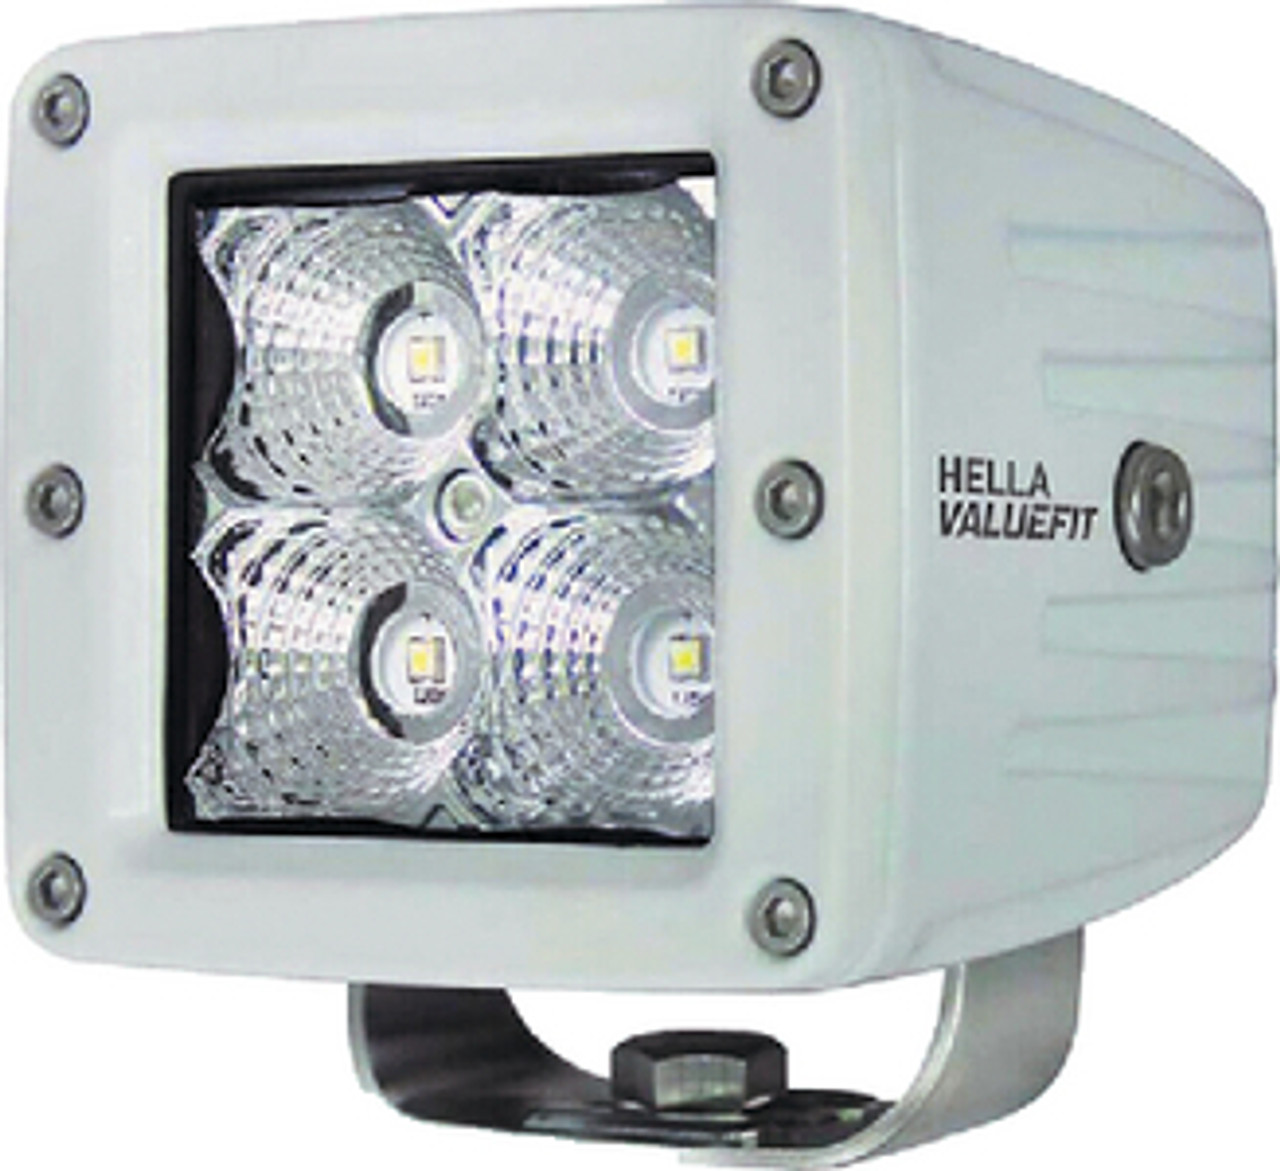 Hella marine - VALUEFIT CUBE 4 LED LIGHT KIT - Description: Flood Light, Single Color: White Lumens: 690